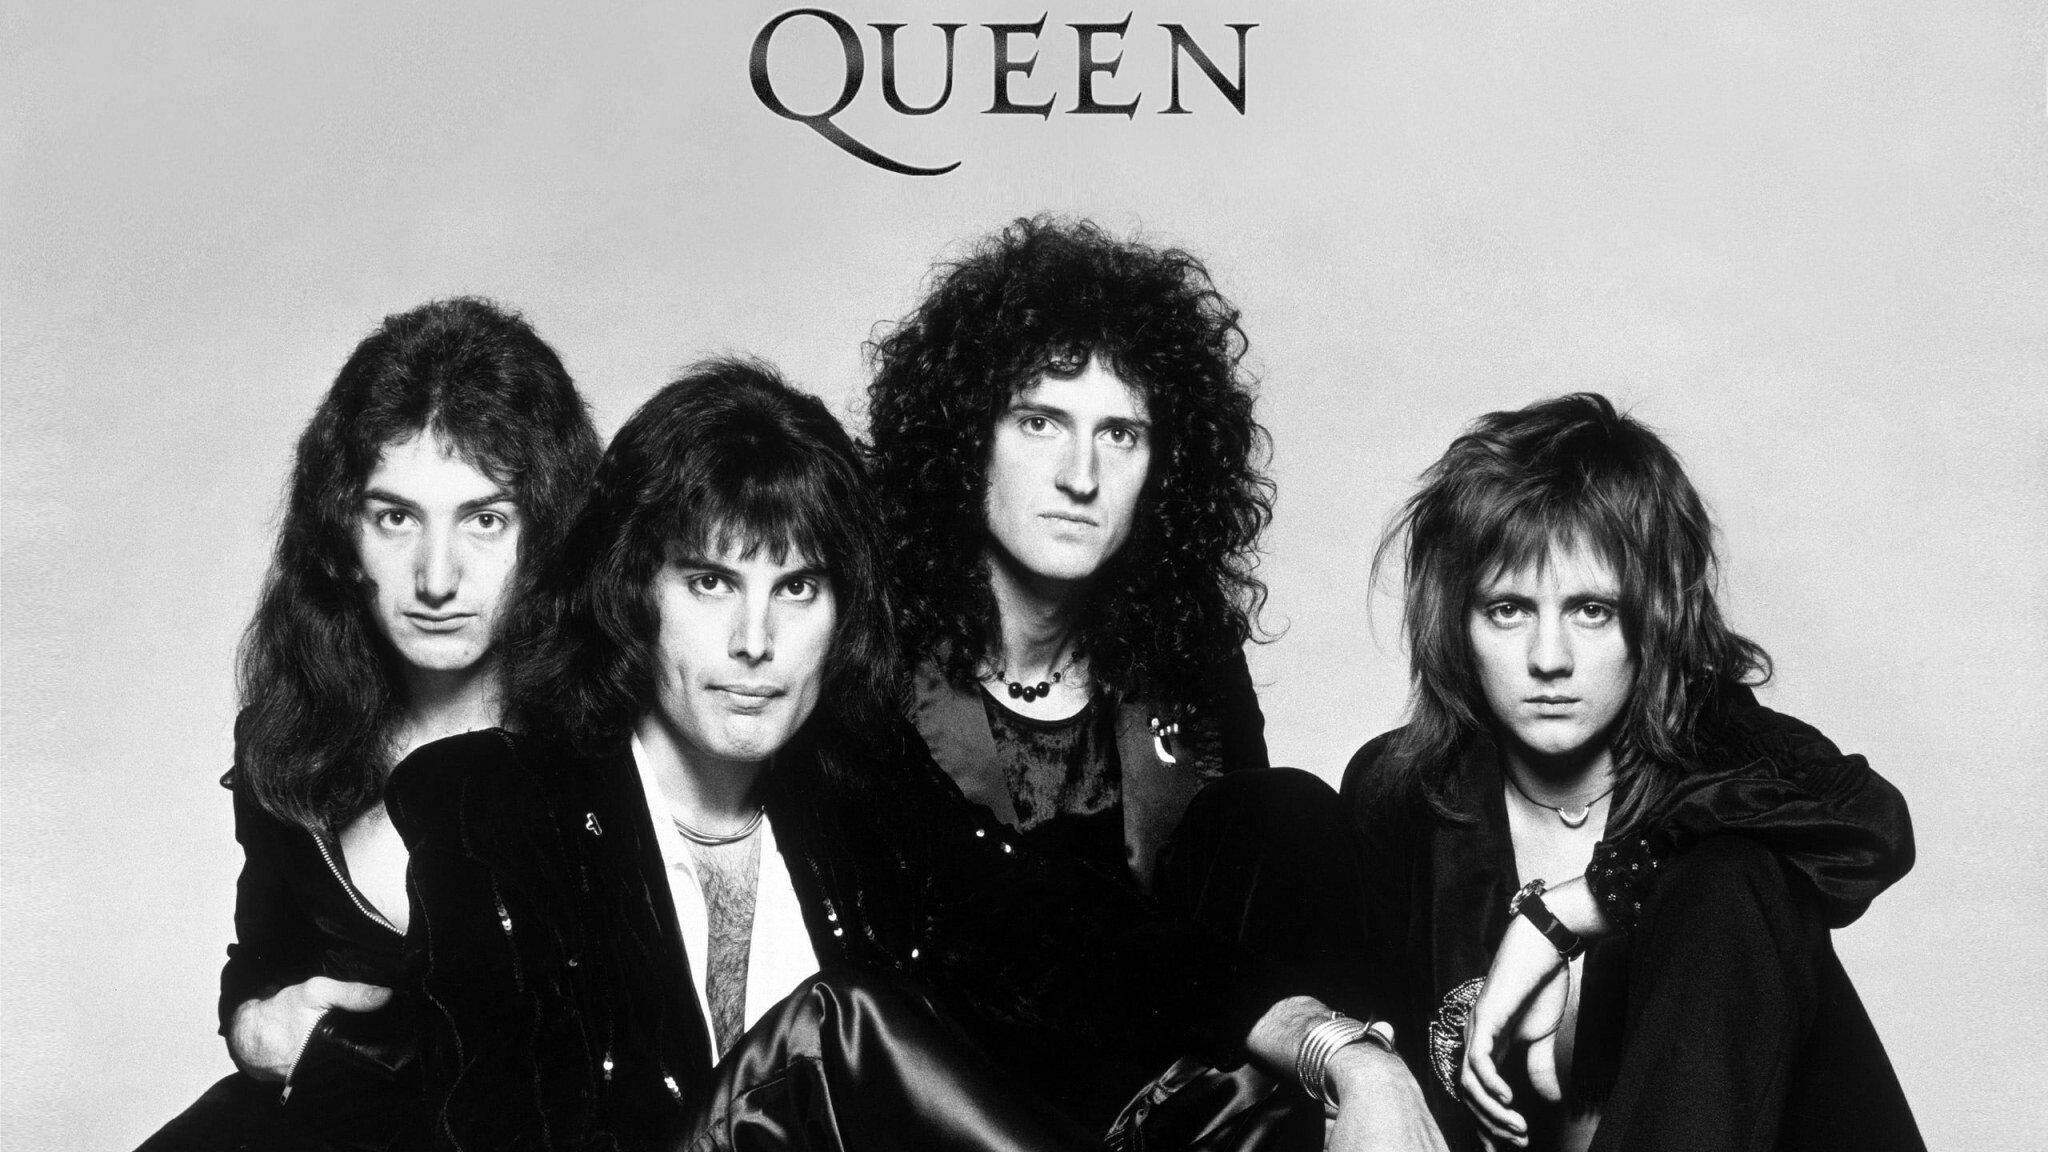 Queen musical band, Rock royalty, Freddie Mercury's early days, Wallpaper for fans, 2050x1160 HD Desktop